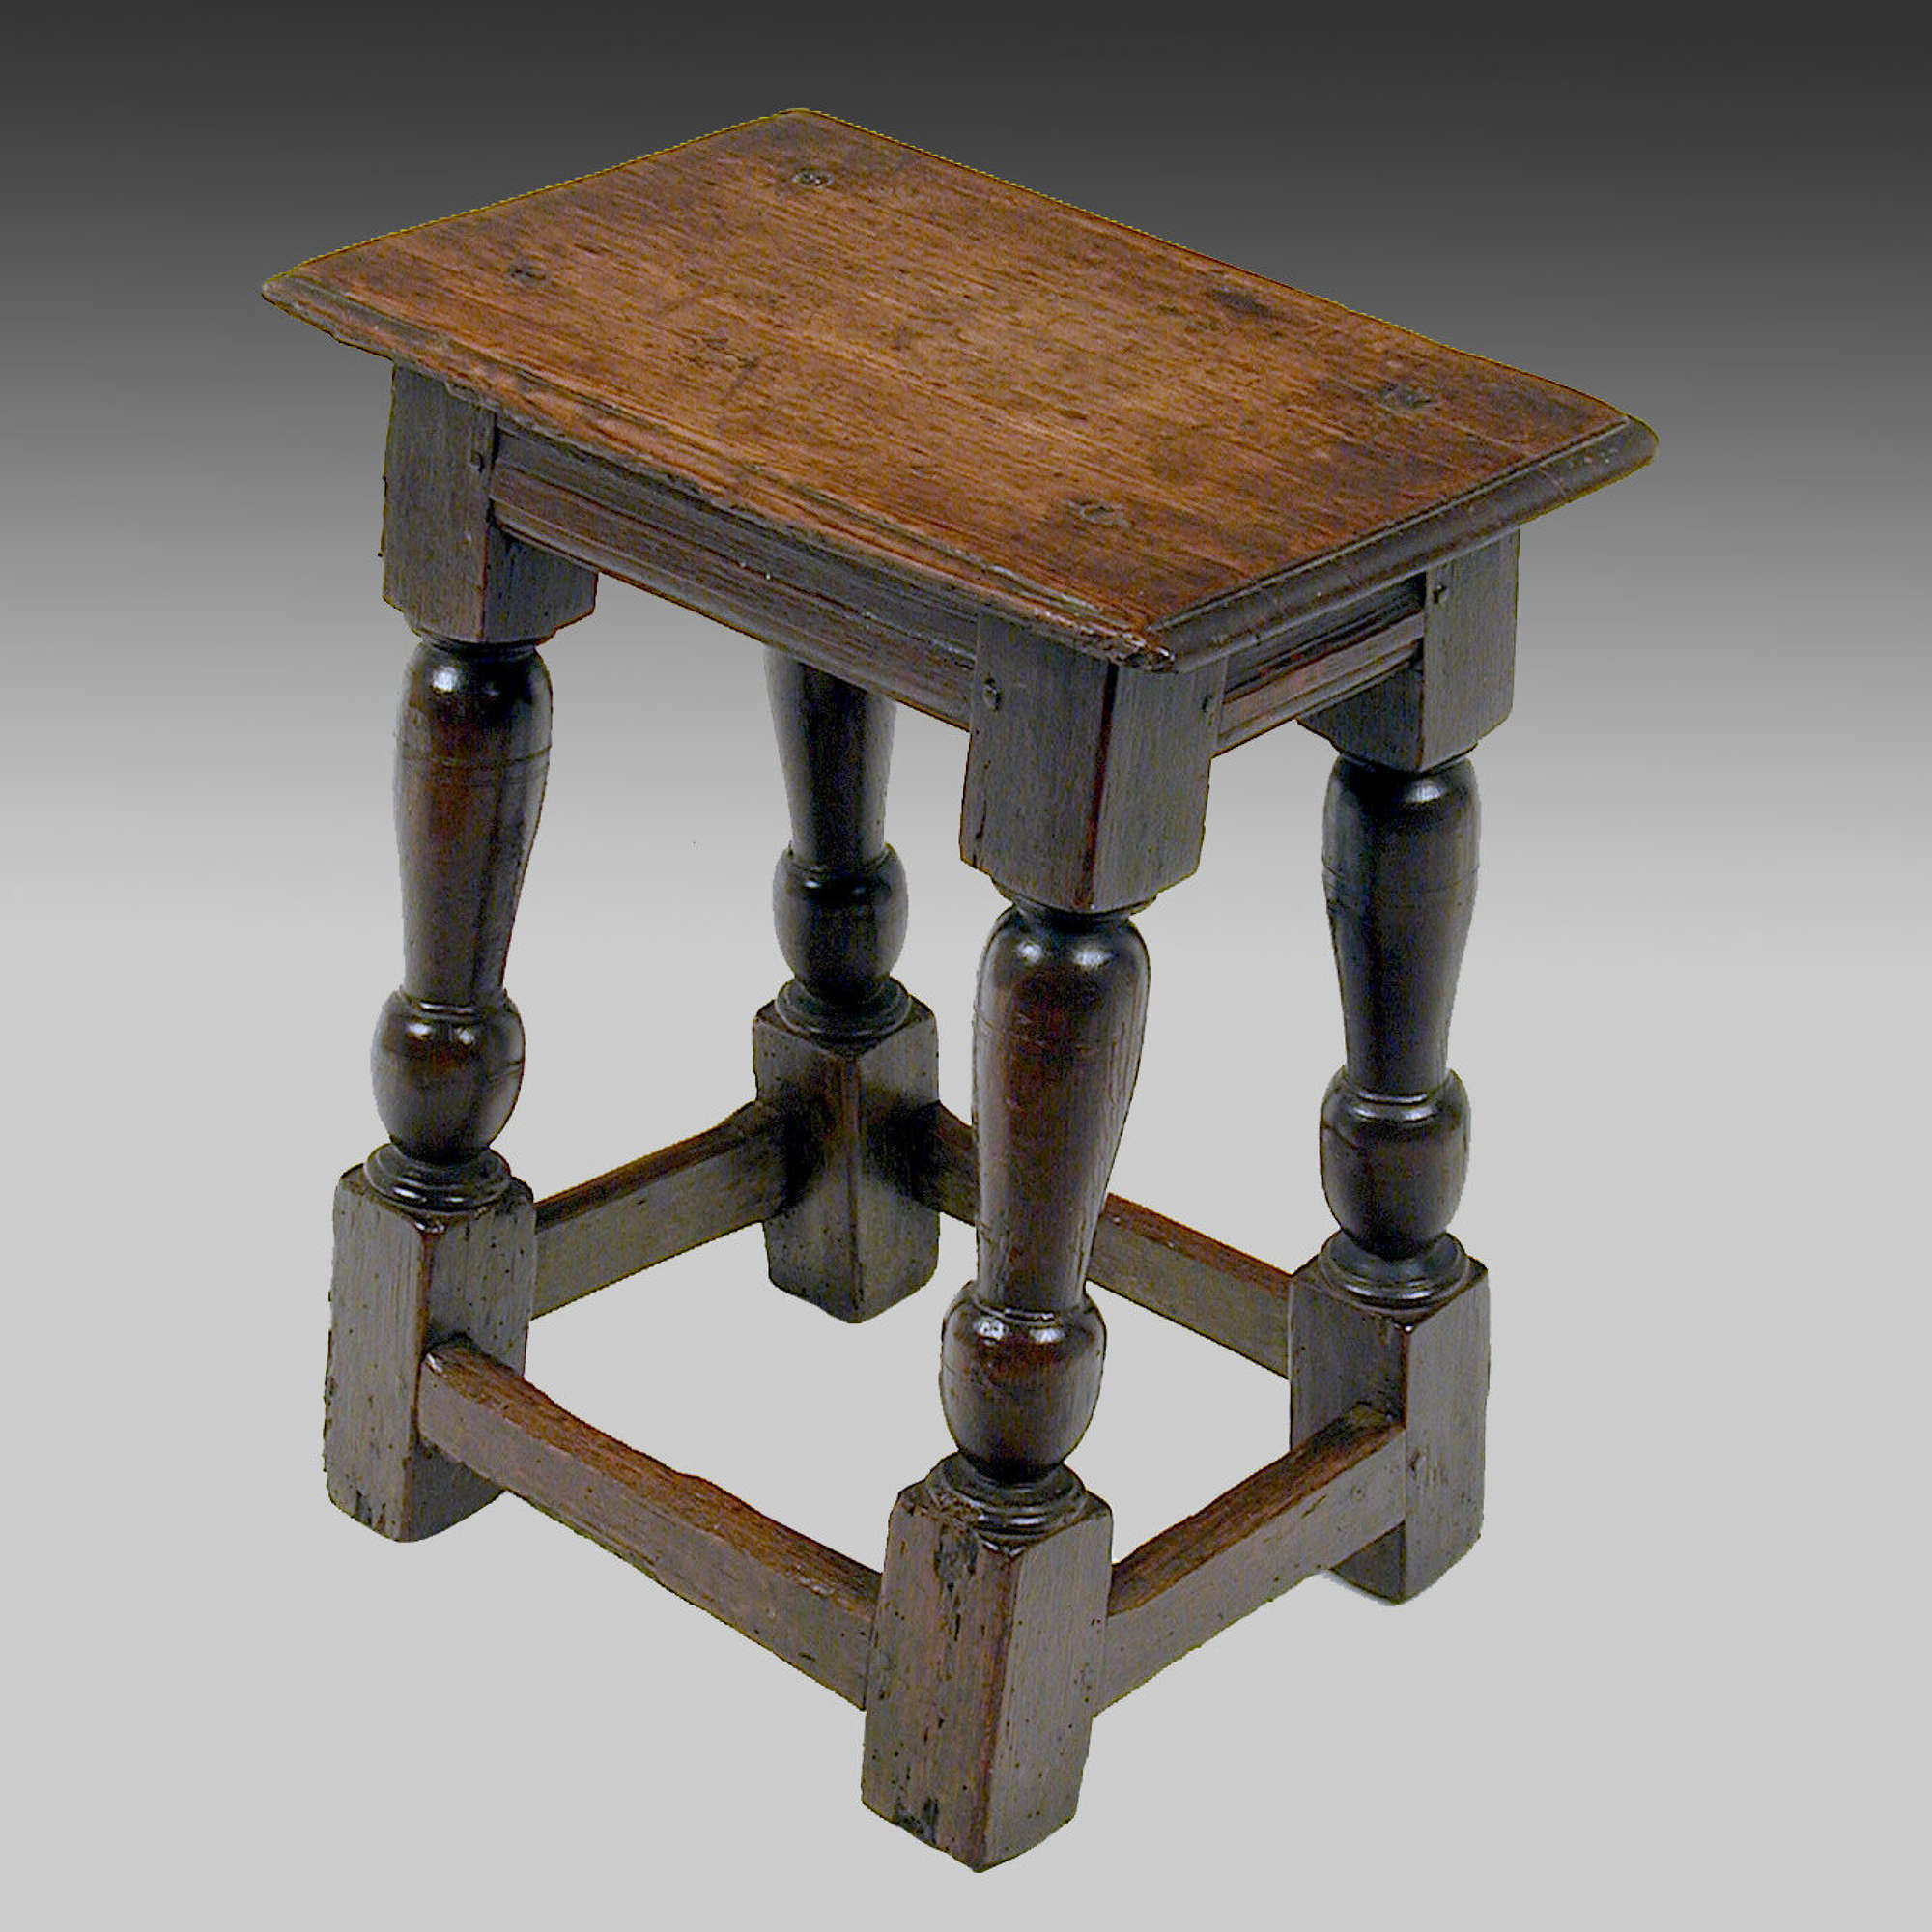 Early 17th century oak joined stool